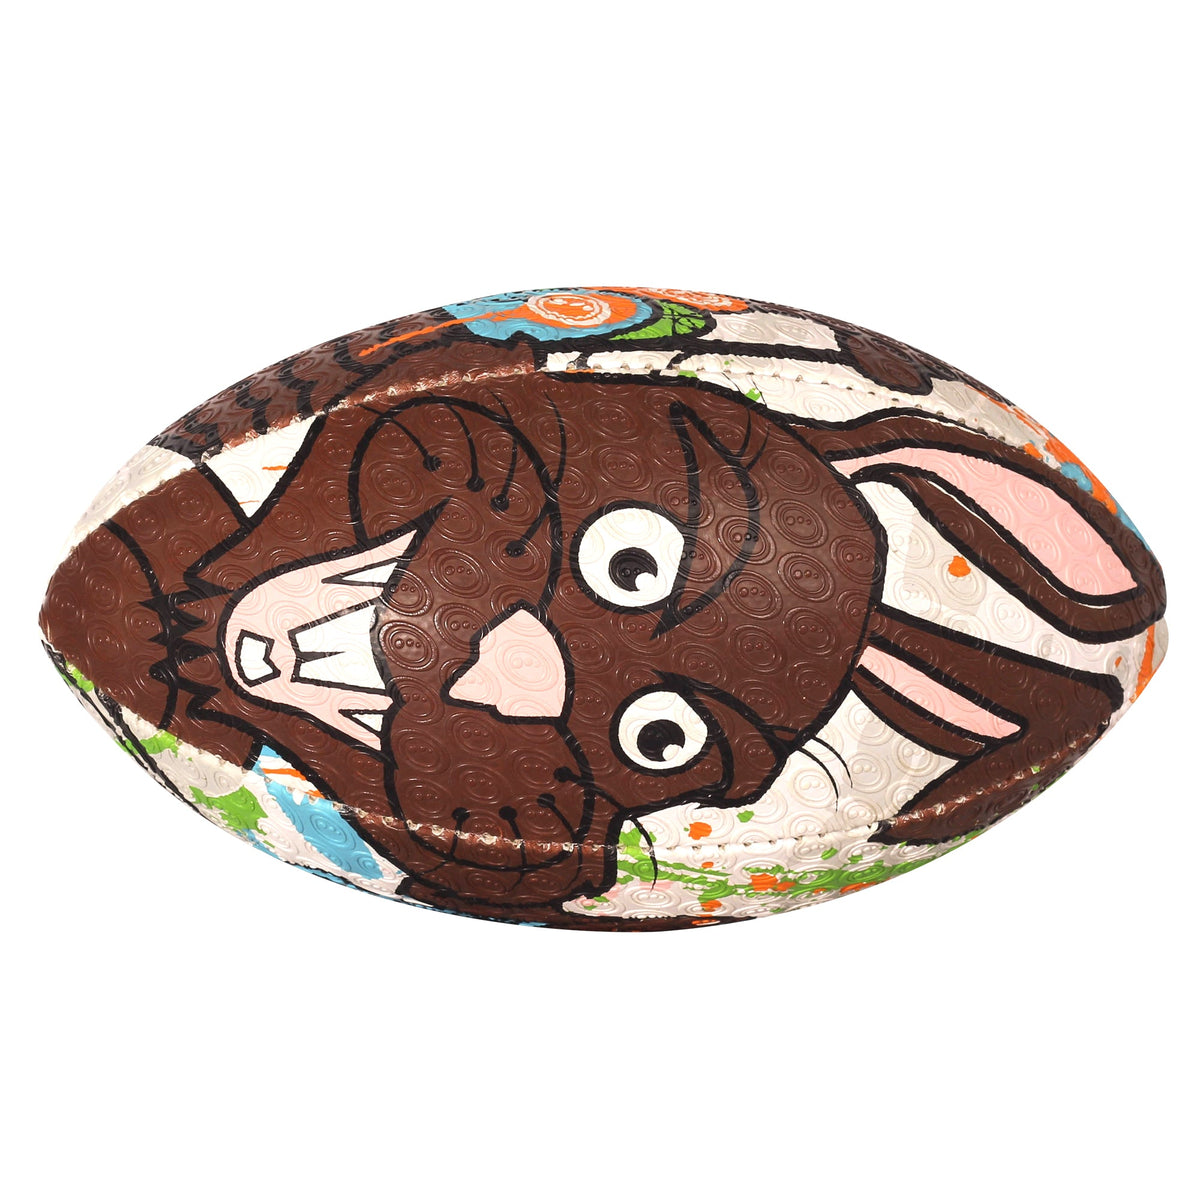 Bad Bunny Rugby Ball - Optimum